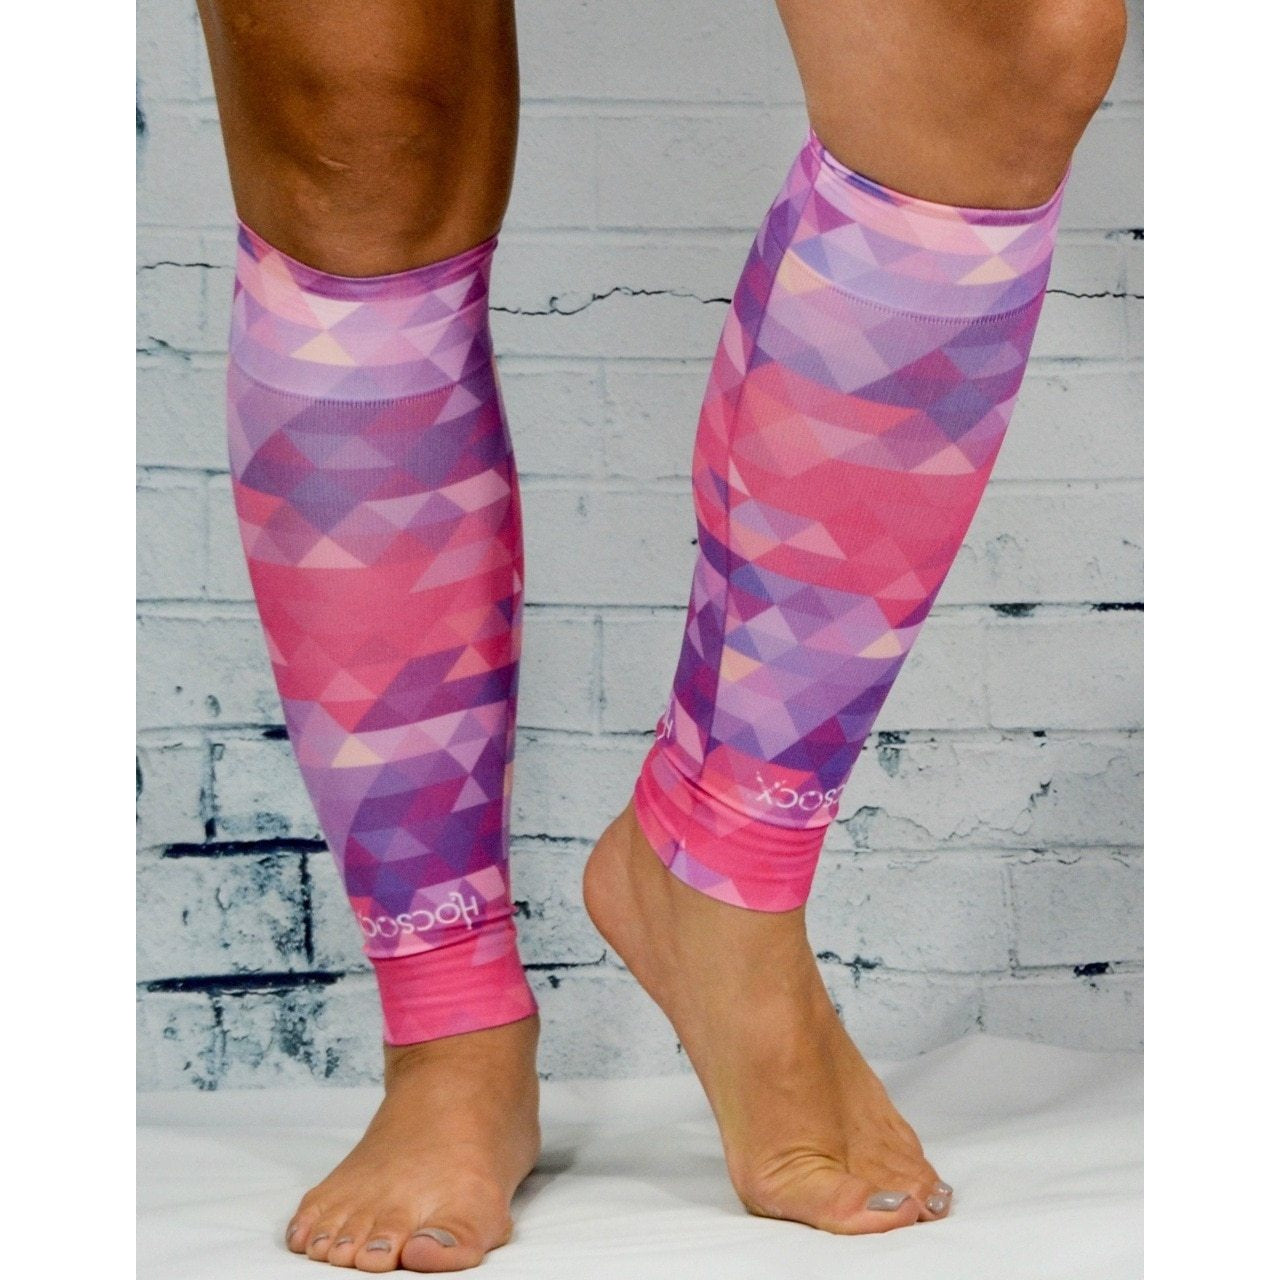 Hocsocx Sports Leg Sleeves Pink Kaleidoscope